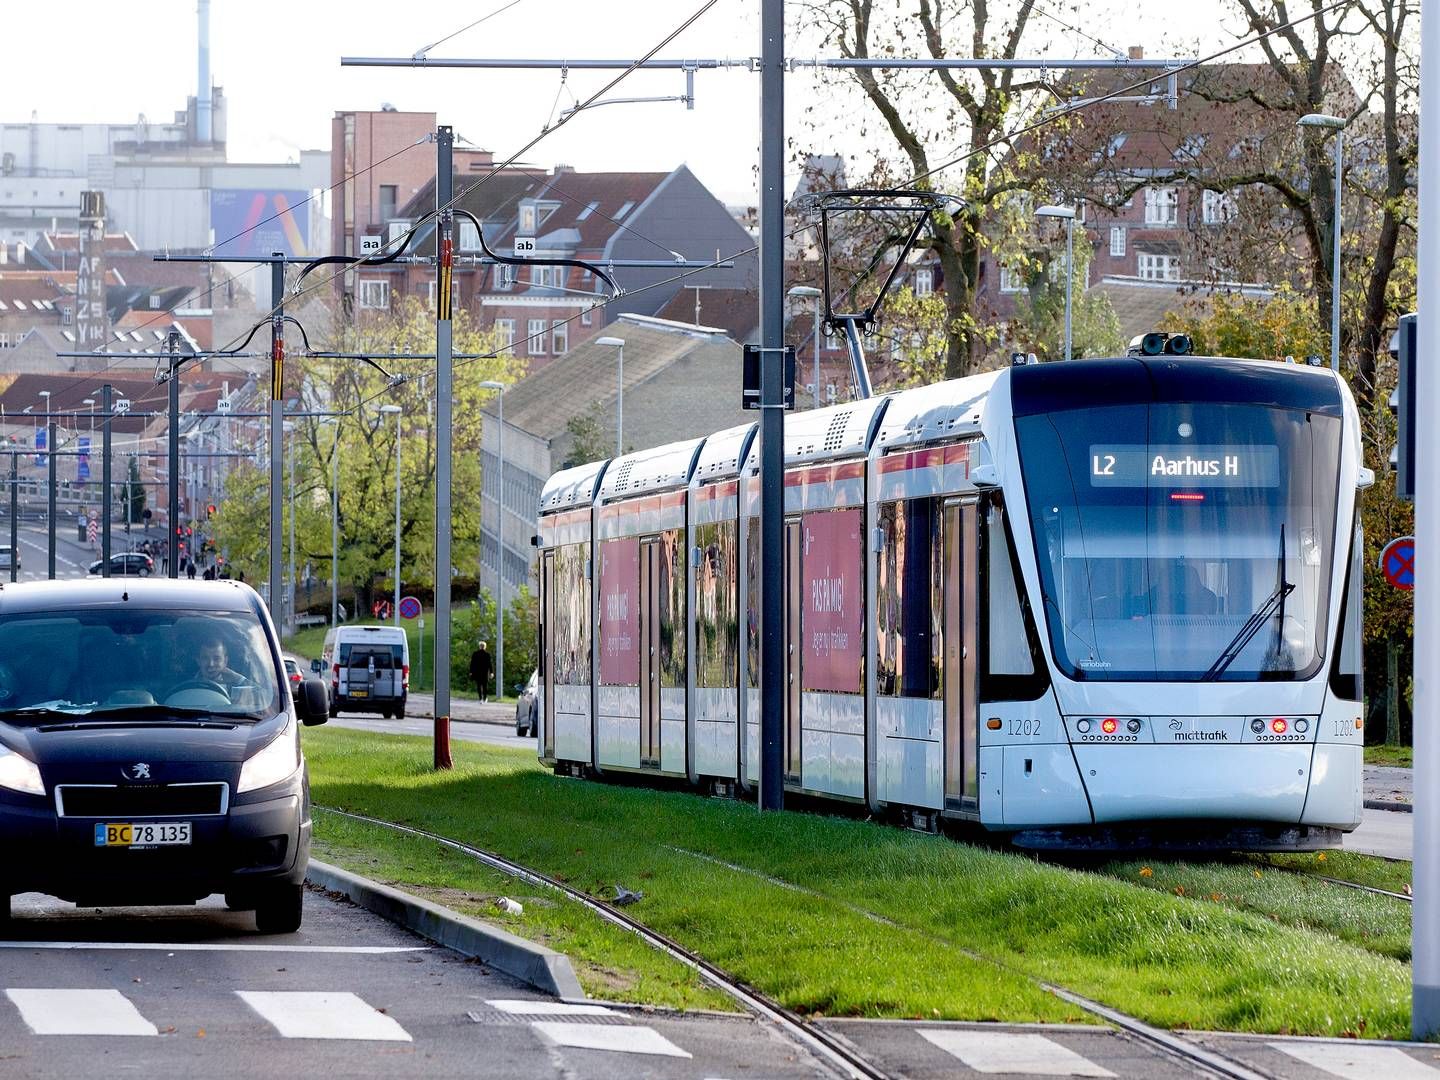 Letbanen i Aarhus forventer at ramme 8-10 mio. passagerer årligt i 2030. | Photo: Finn Frandsen/Politiken/Ritzau Scanpix